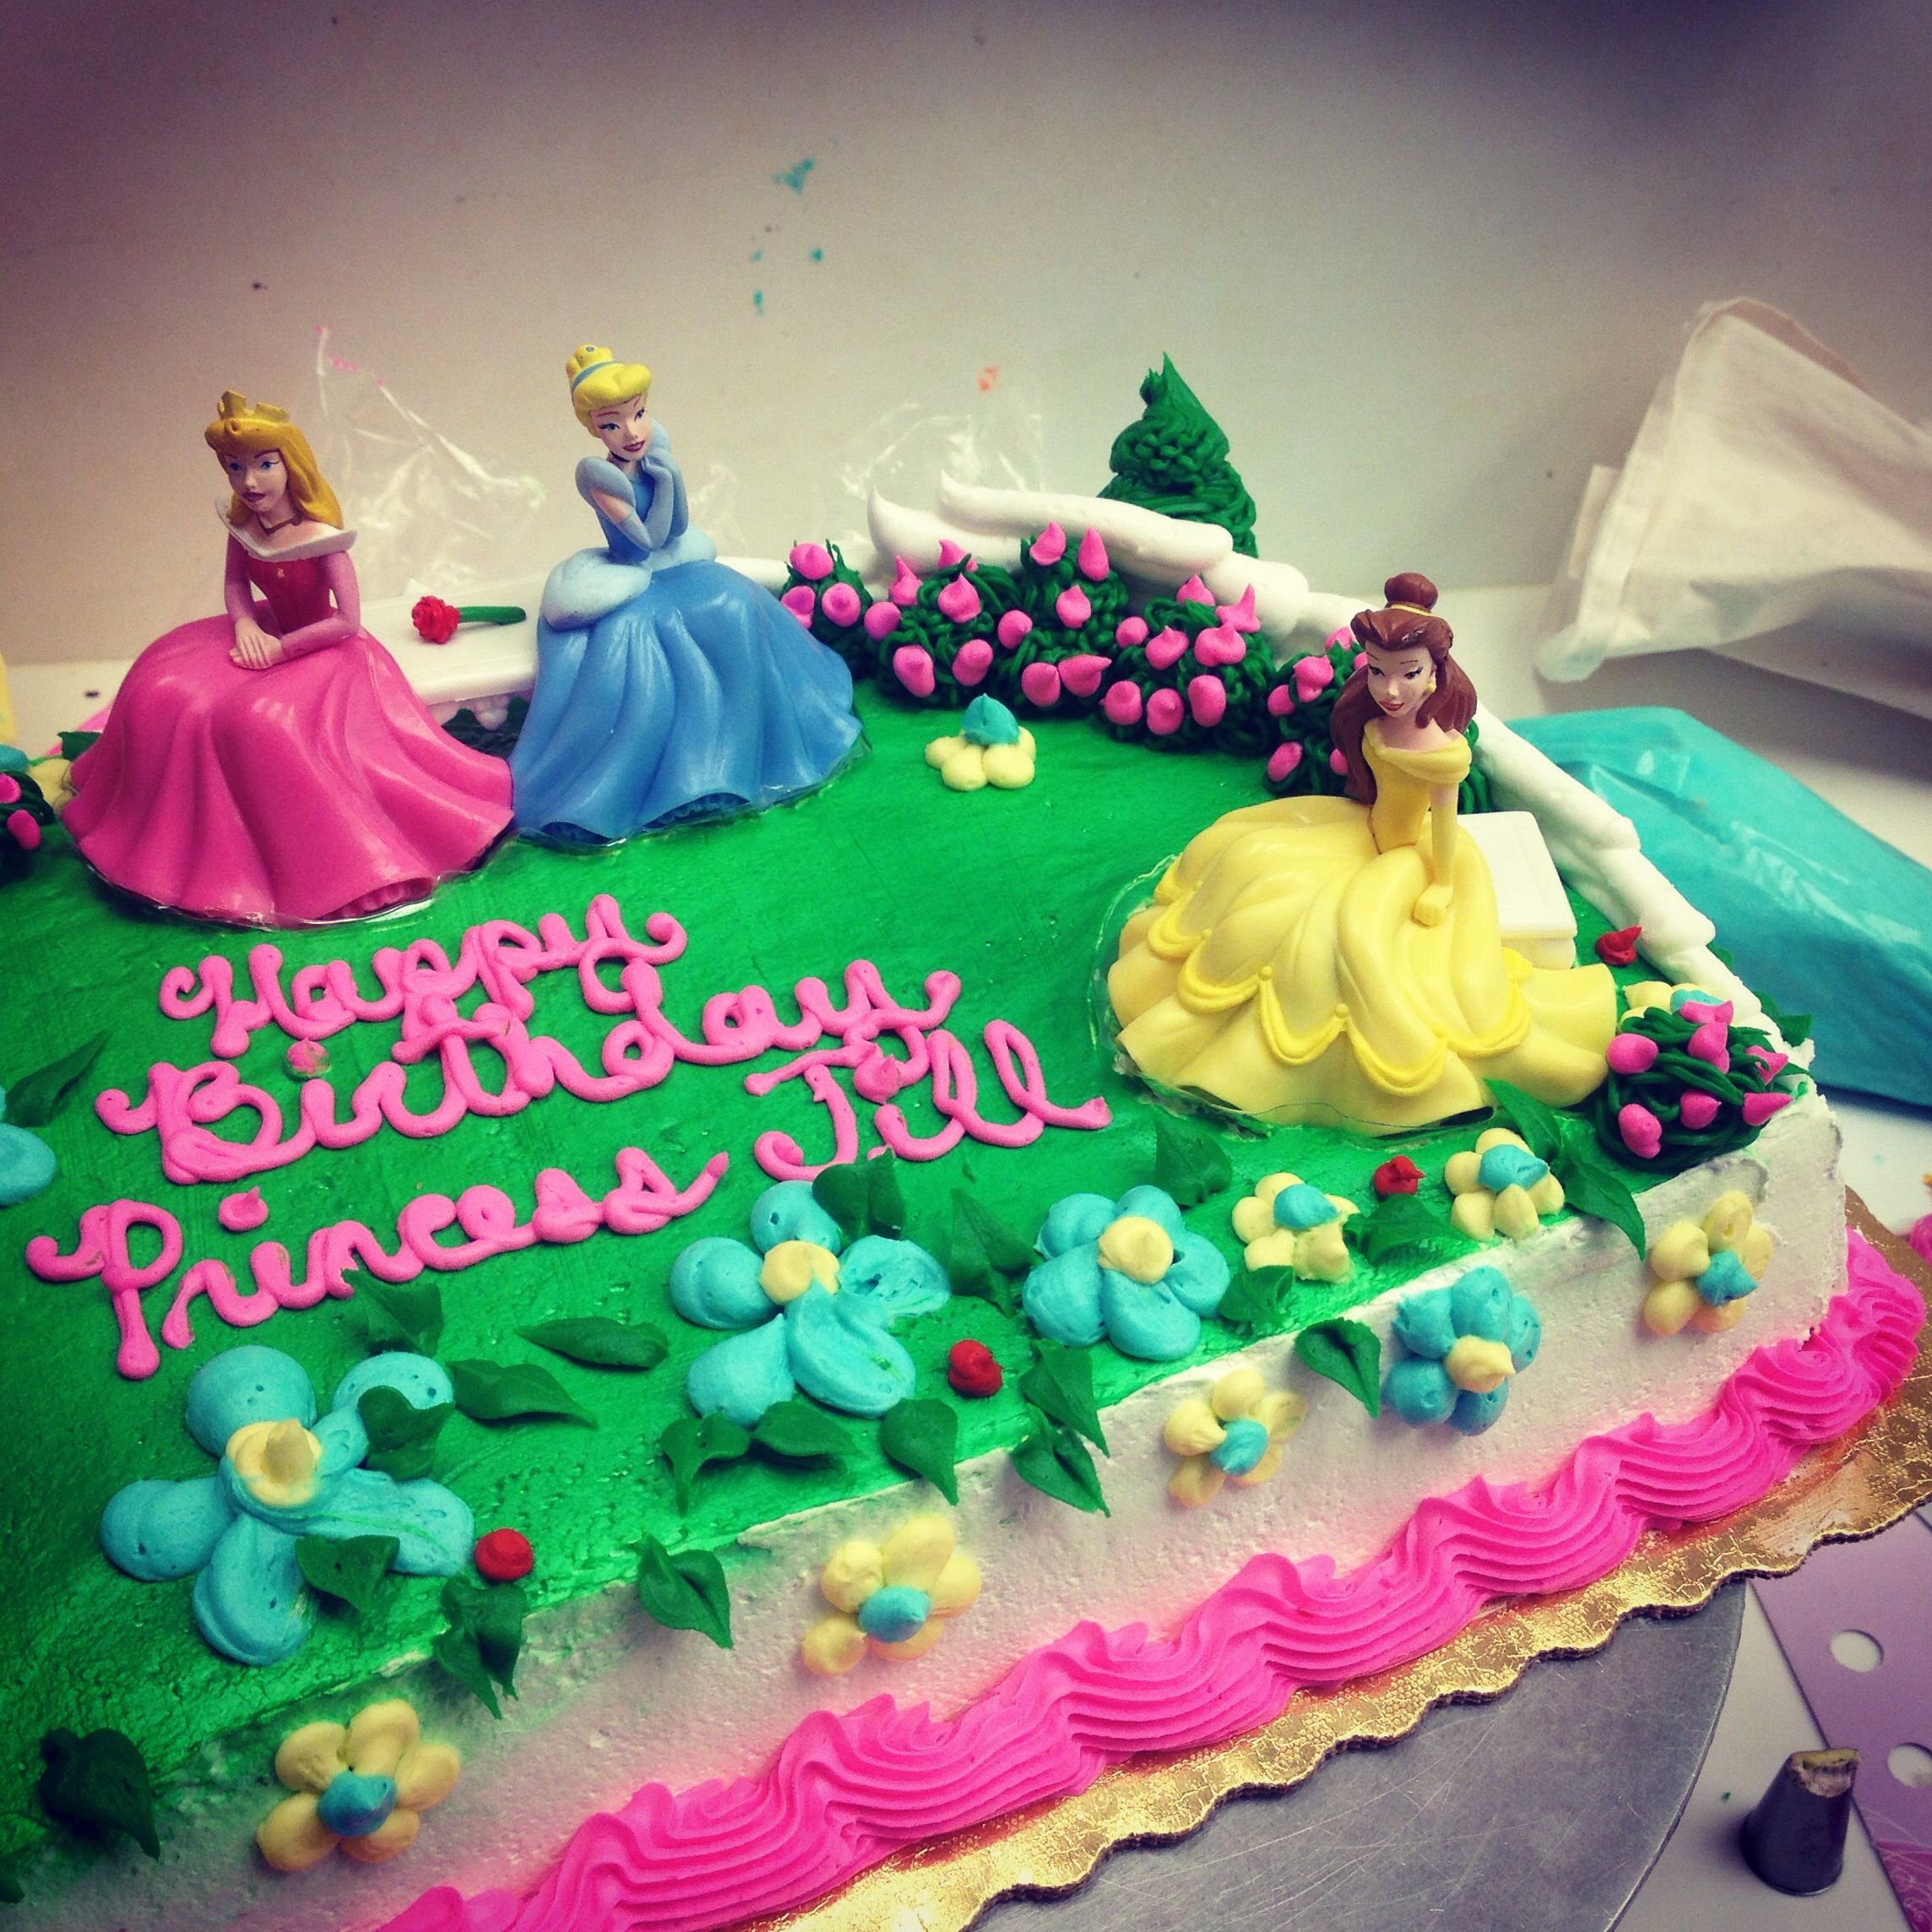 Торт для девочки с принцессой. Торт с принцессами. Тортик для принцессы. Торт с принцессами для девочки. Торт с принцессами Диснея.